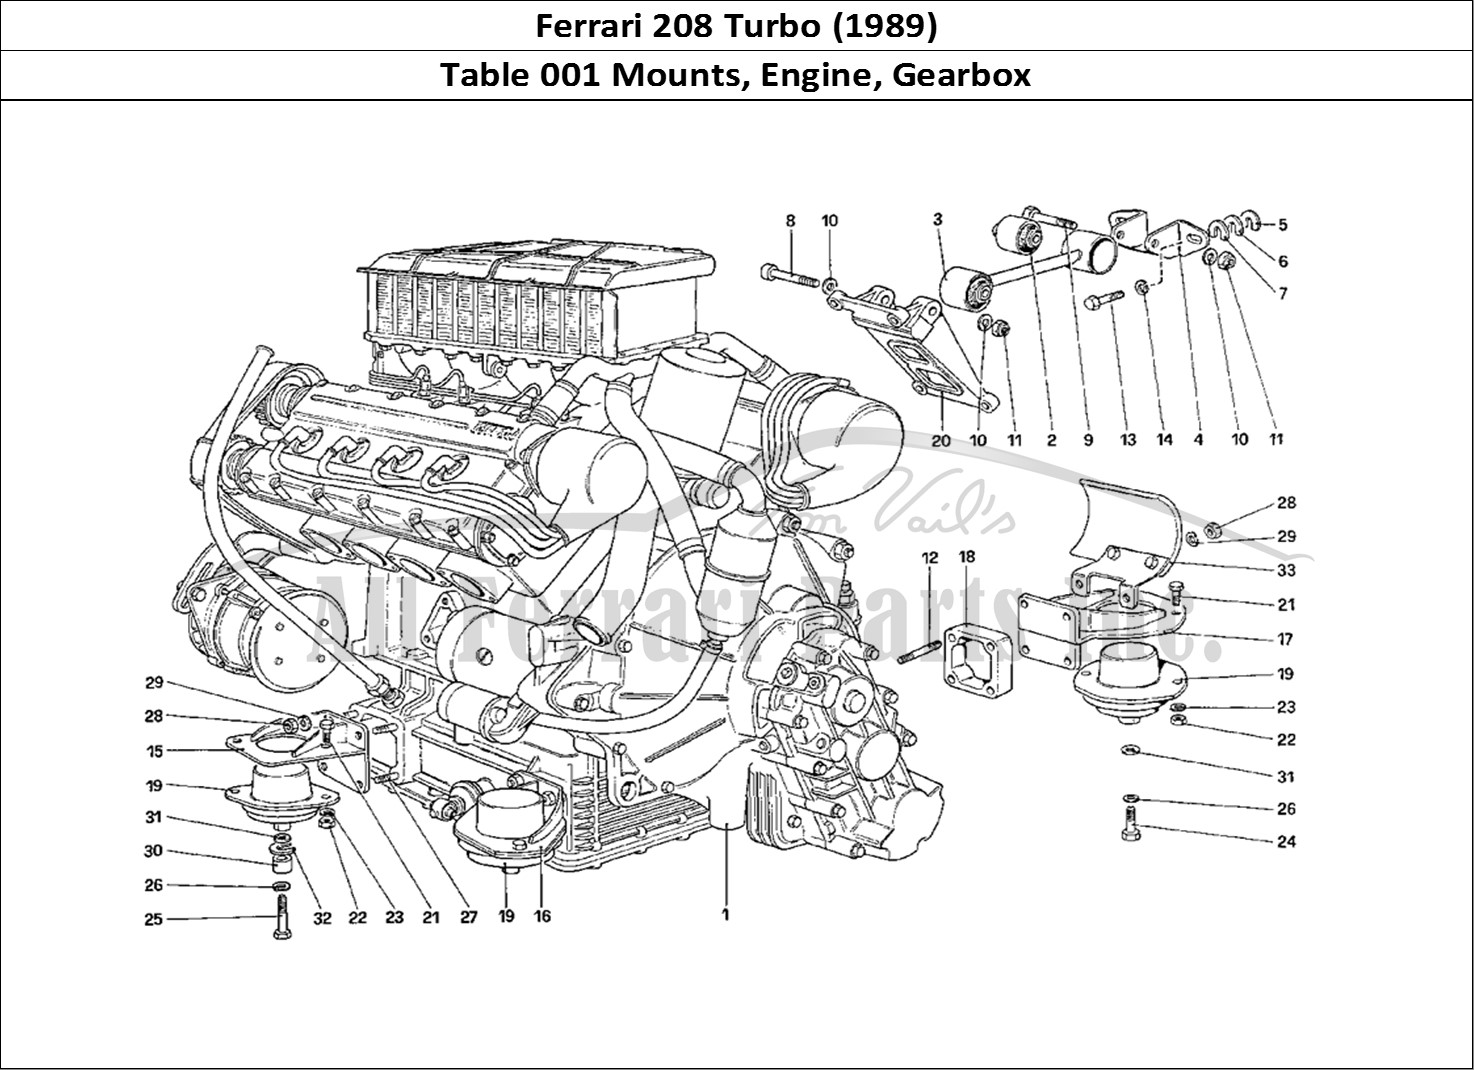 Ferrari Parts Ferrari 208 Turbo (1989) Page 001 Engine - Gearbox and Supp